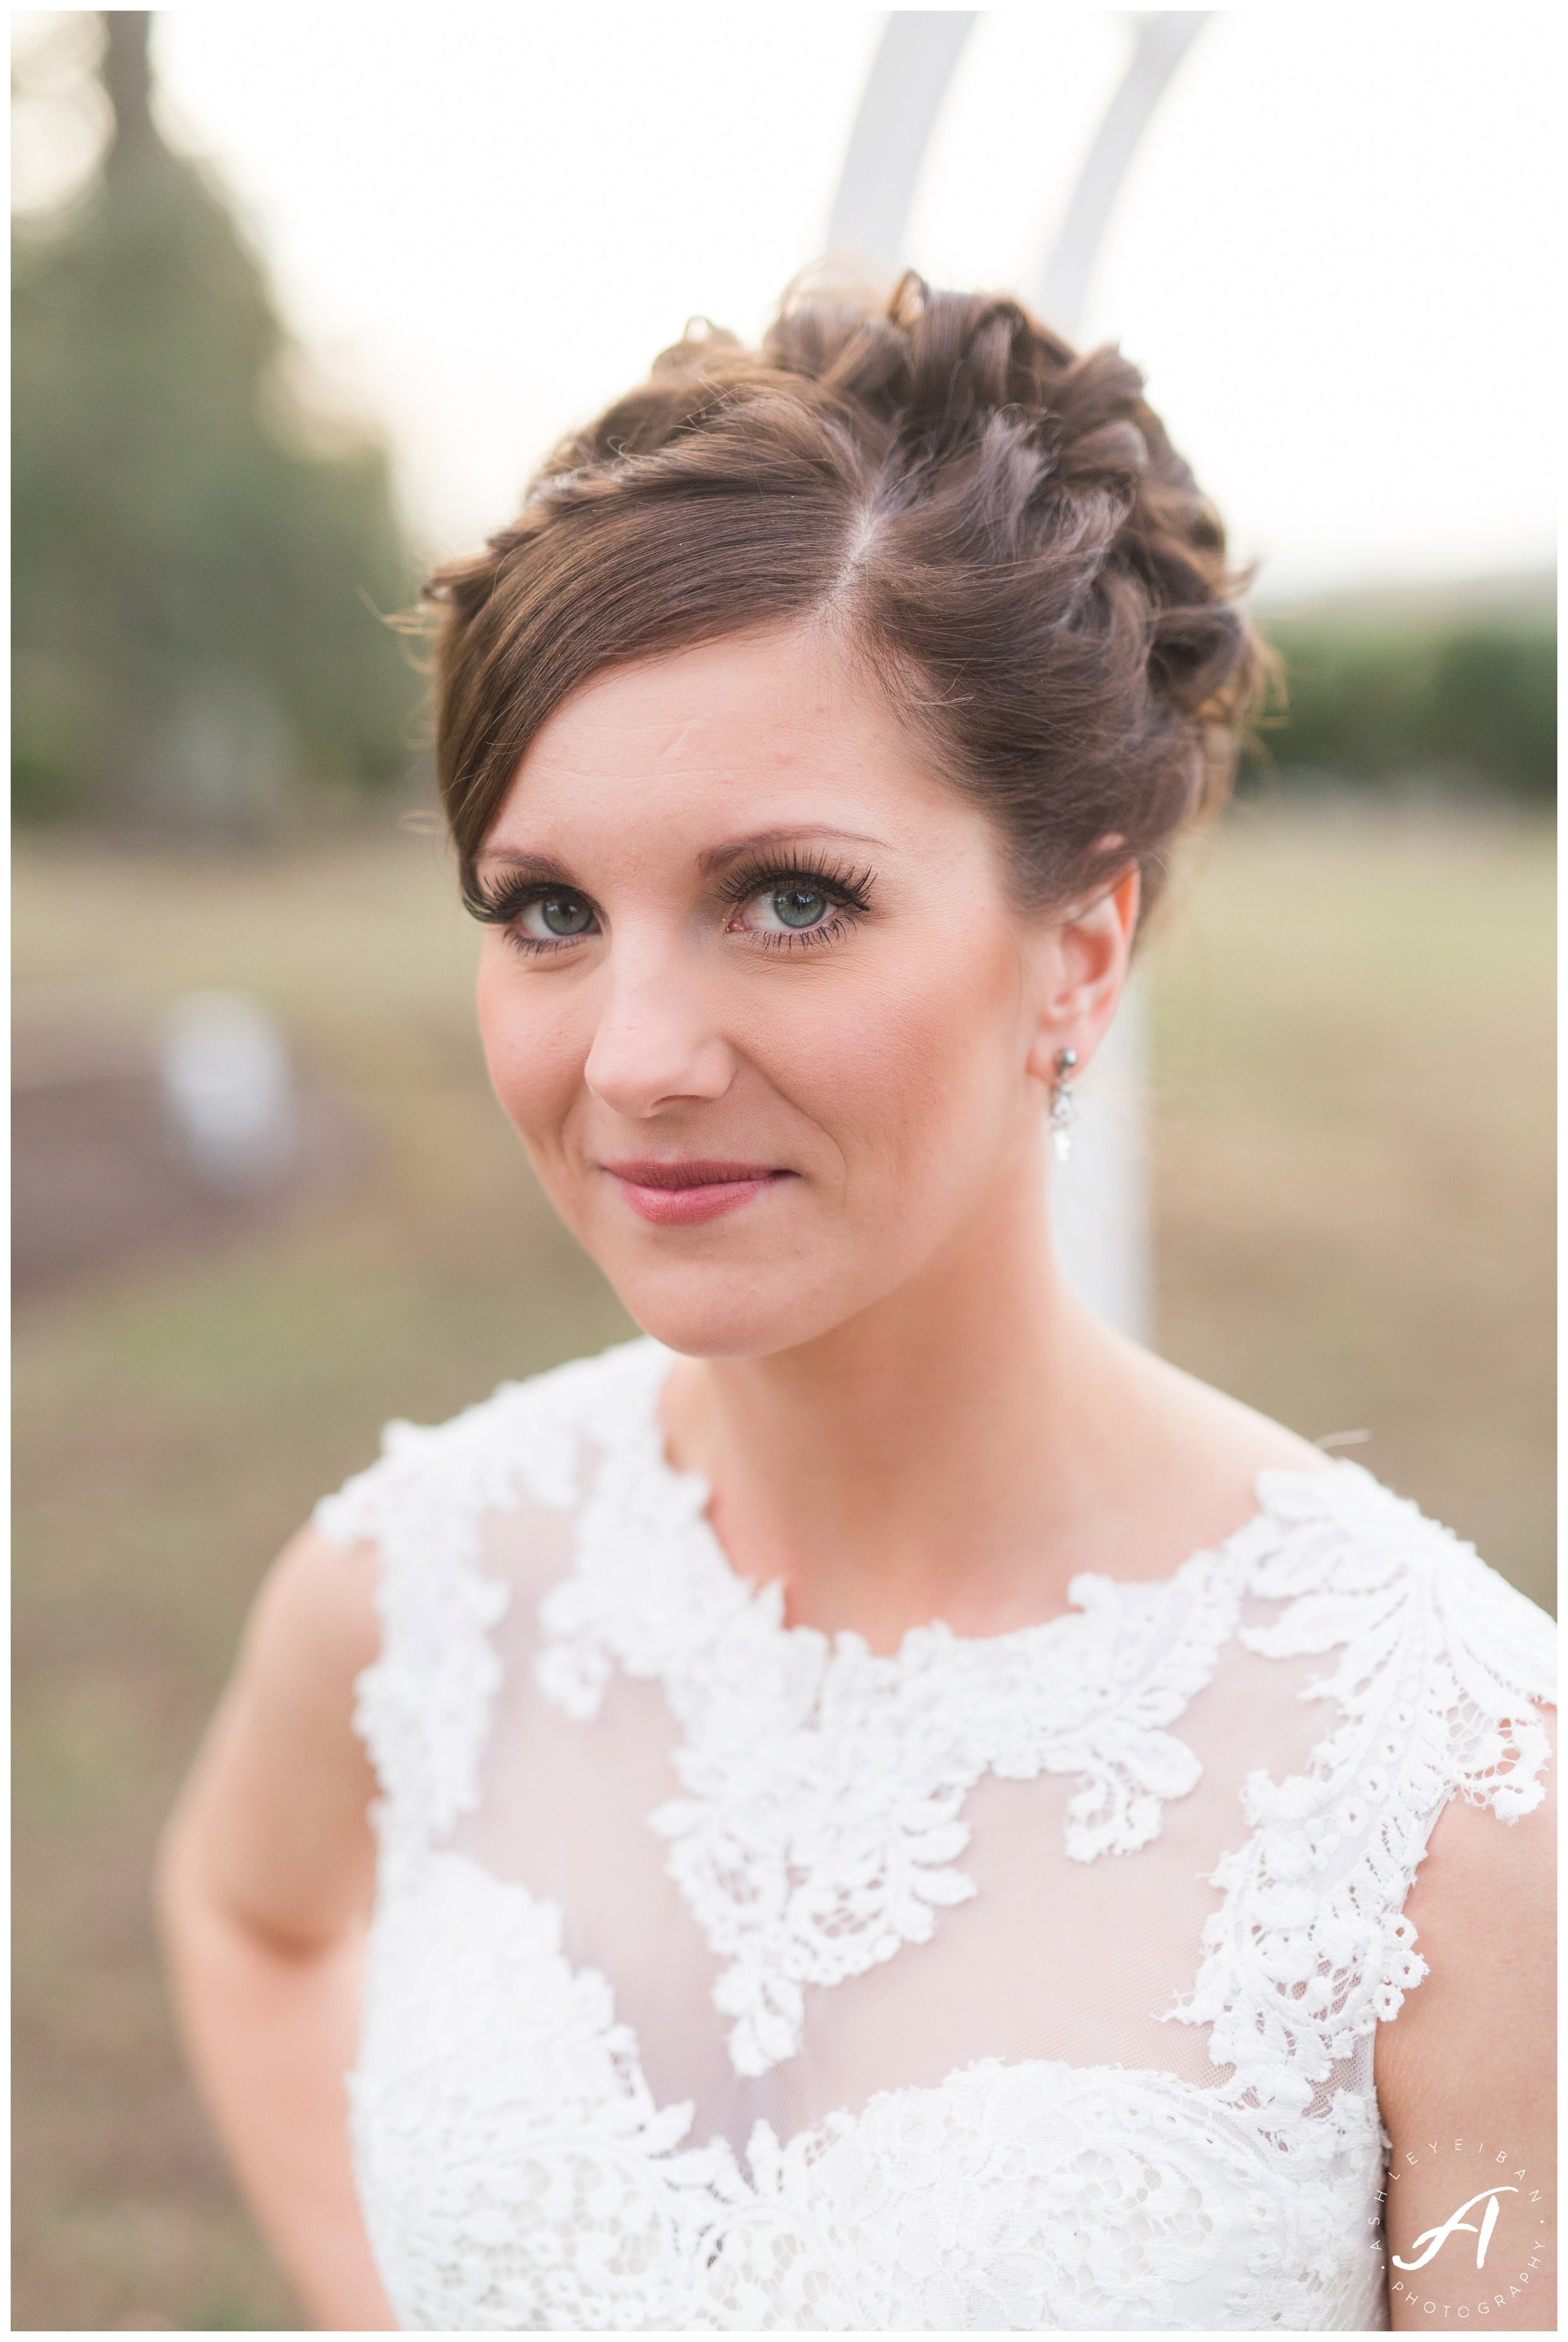 Charlottesville and Lynchburg Wedding and Portrait Photographer || Lynchburg Bridal Portraits || Ashley Eiban Photography || www.ashleyeiban.com